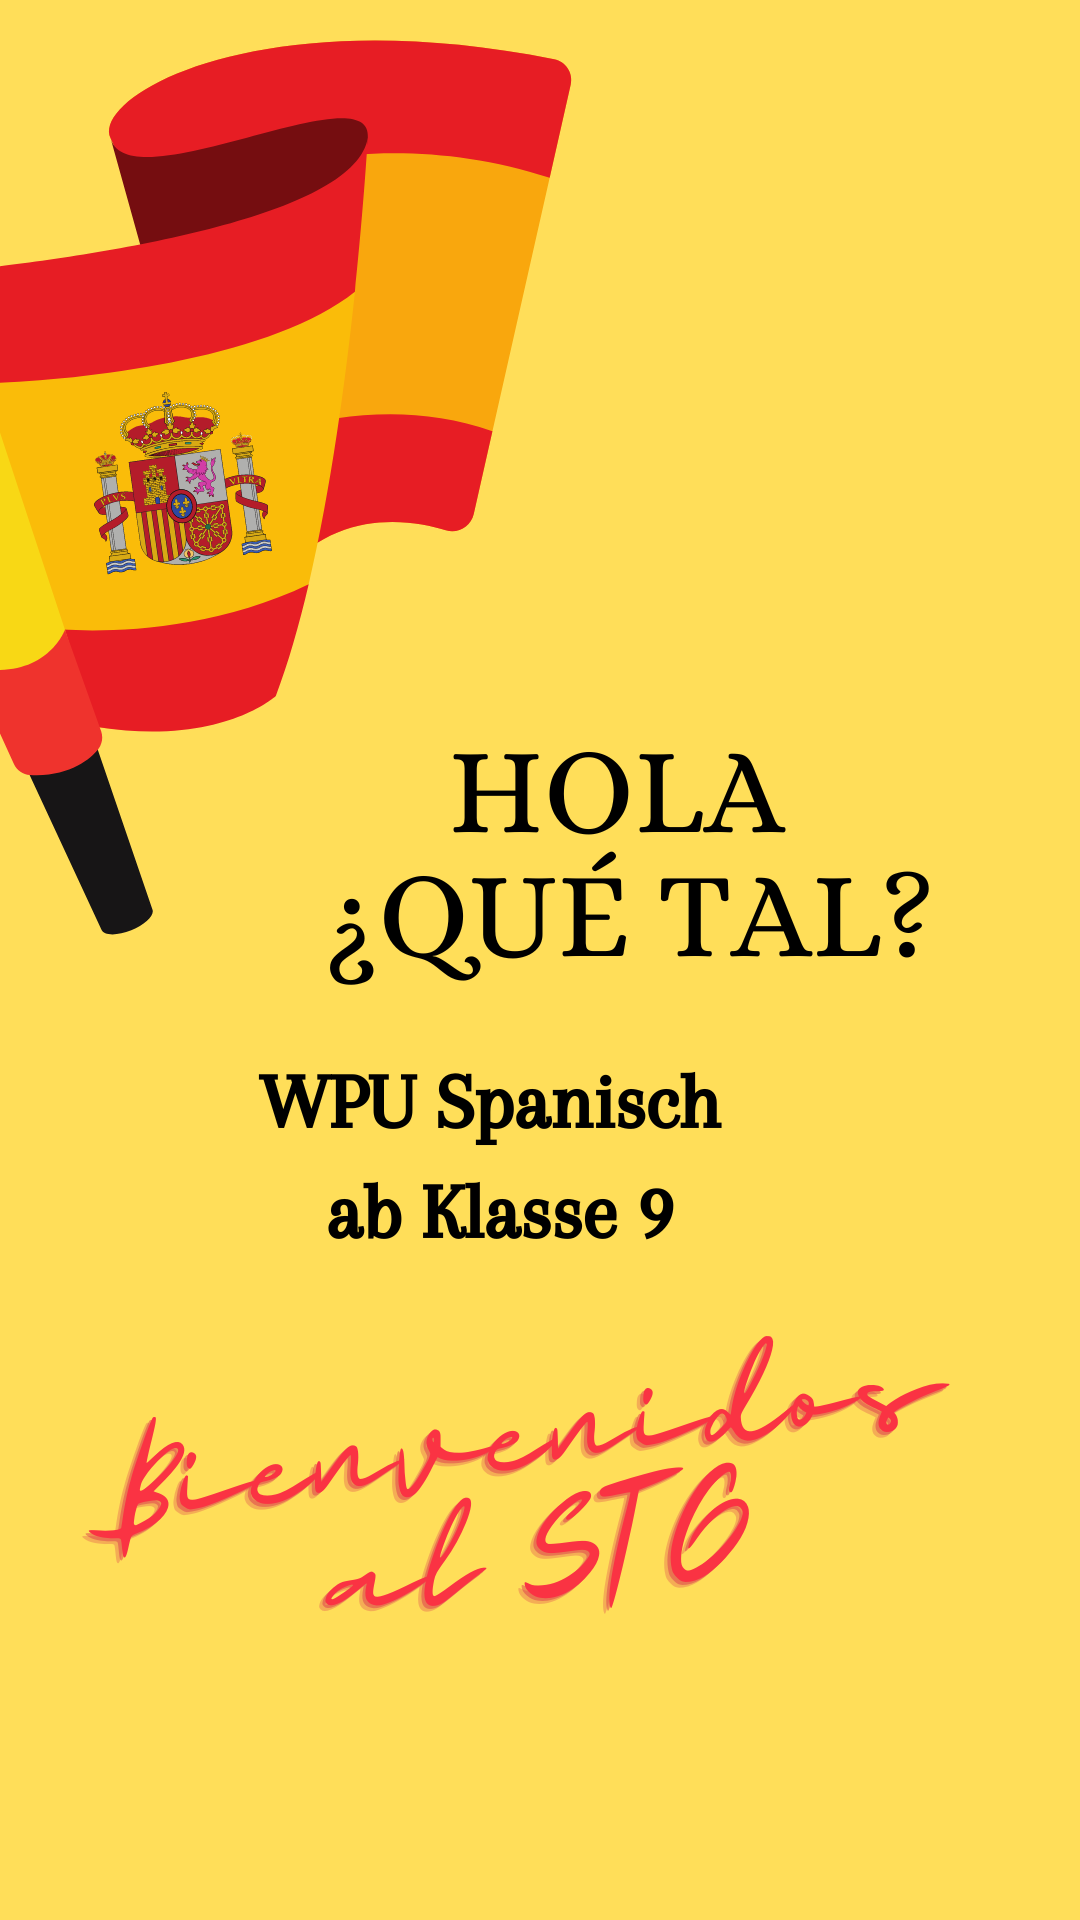 WPU Spanisch